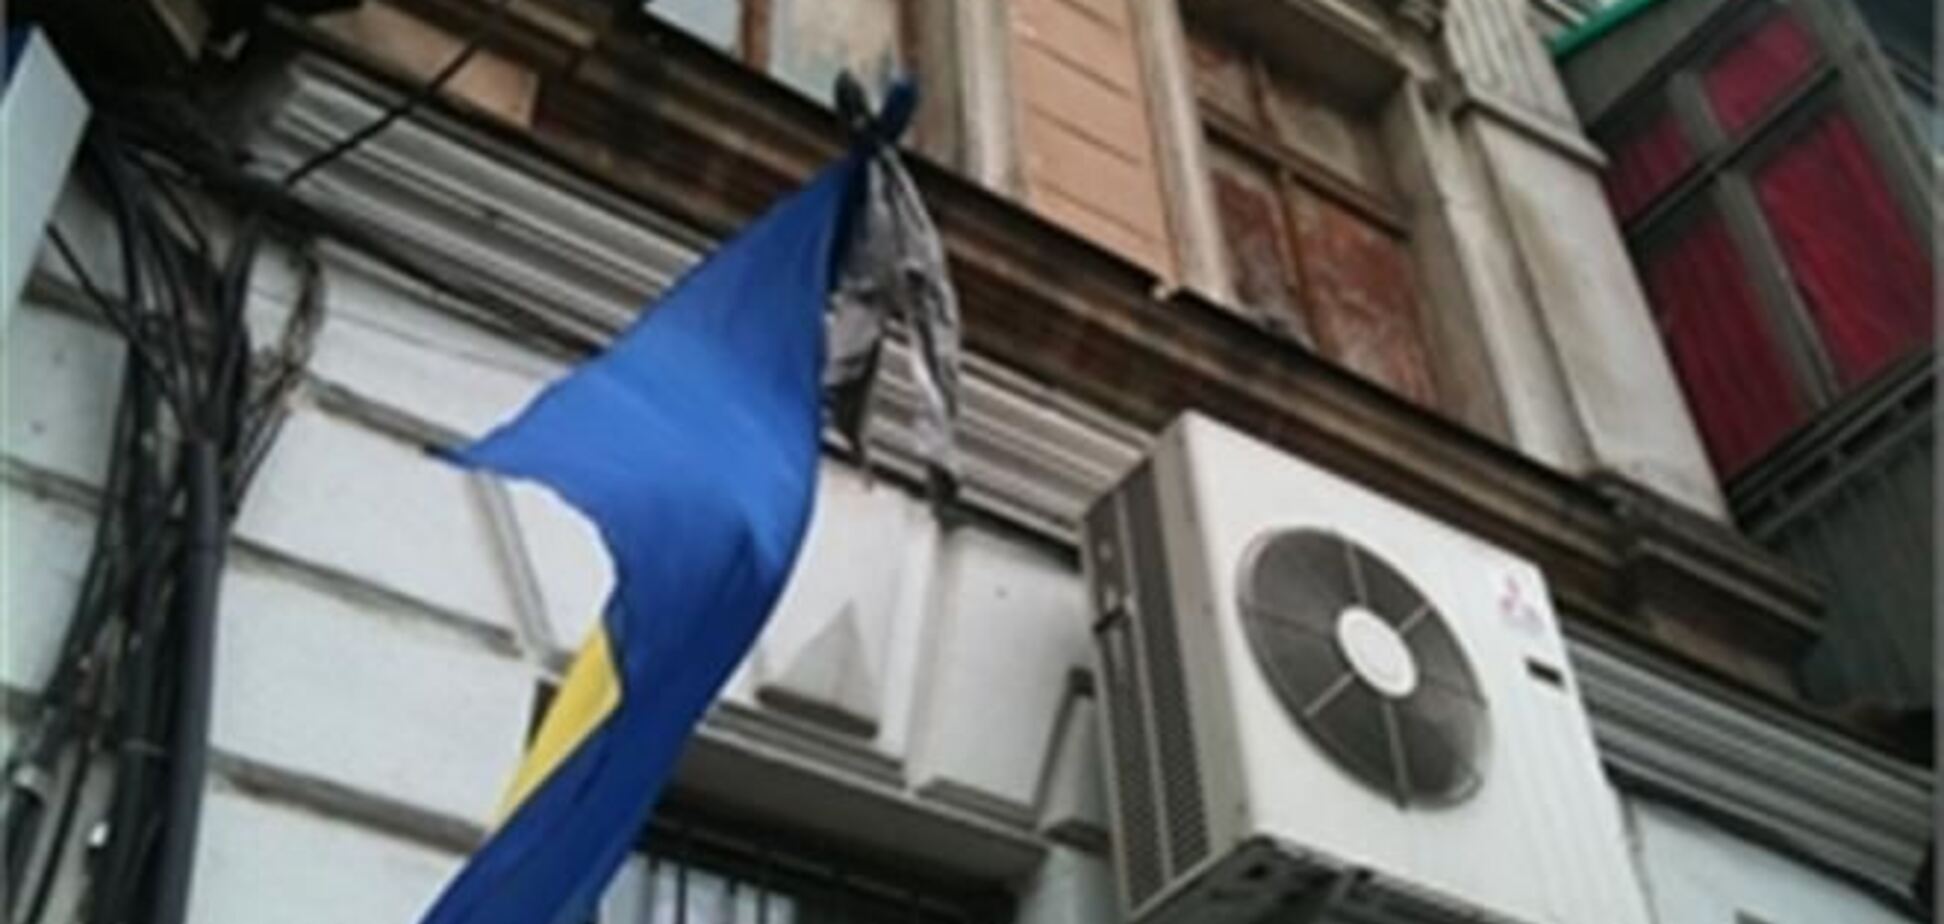 Скандал в Одесі: комунальники наділи на прапор України сміттєвий пакет